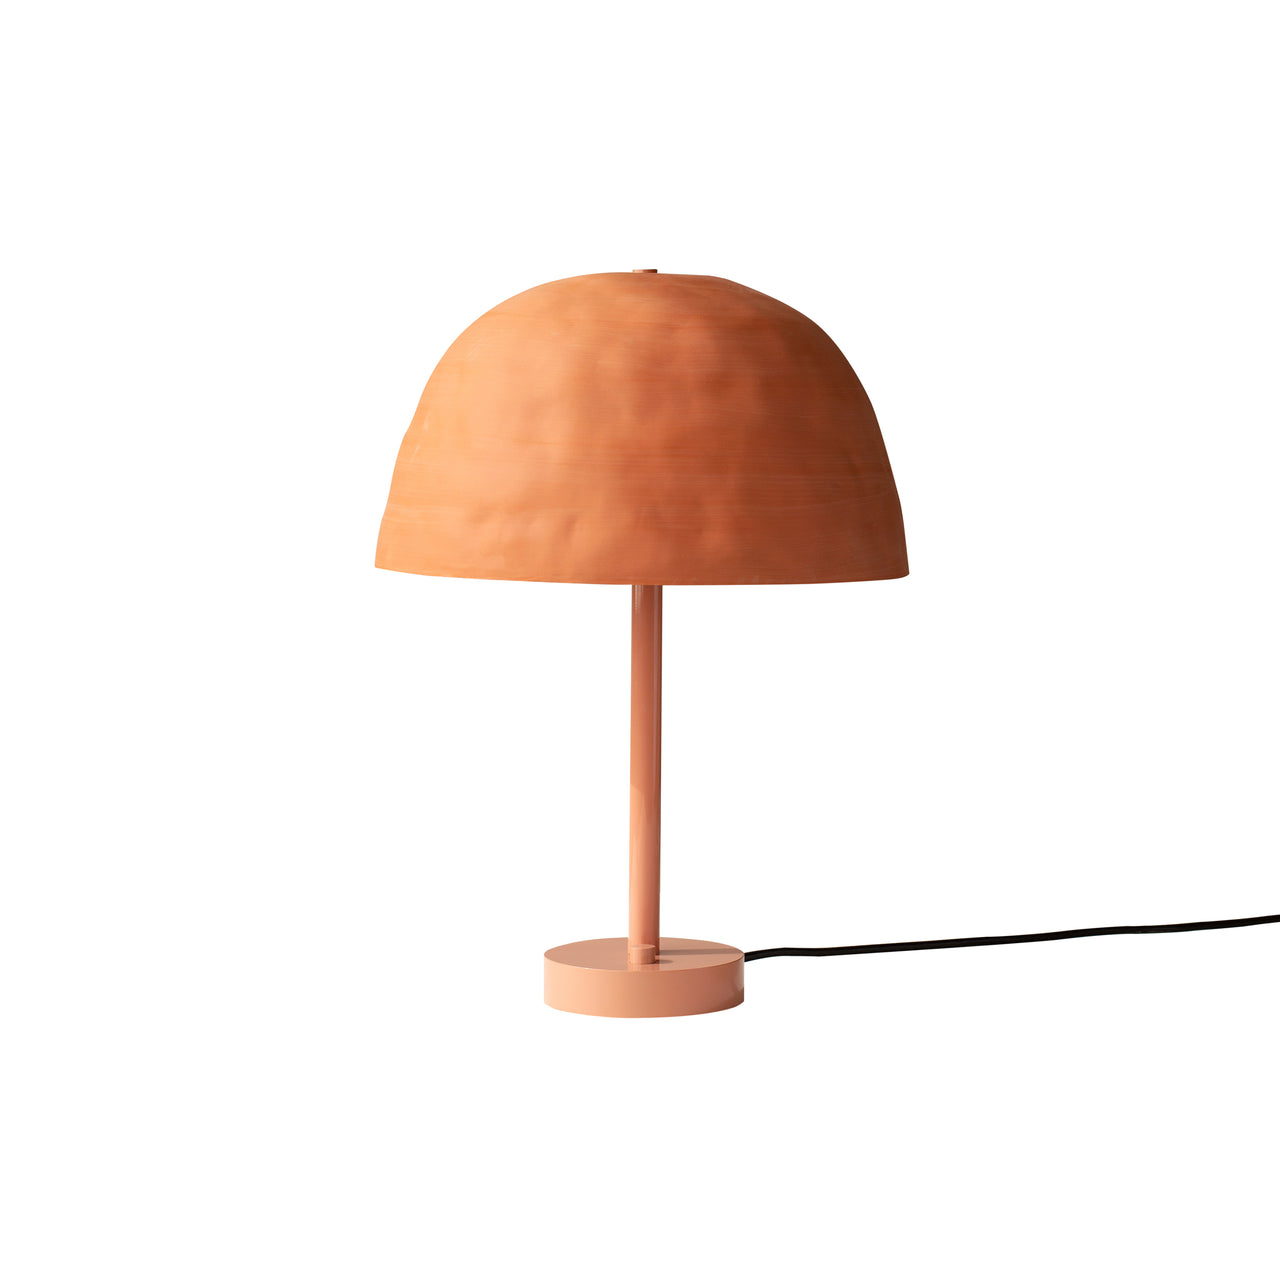 Dome Table Lamp: Terracotta + Peach